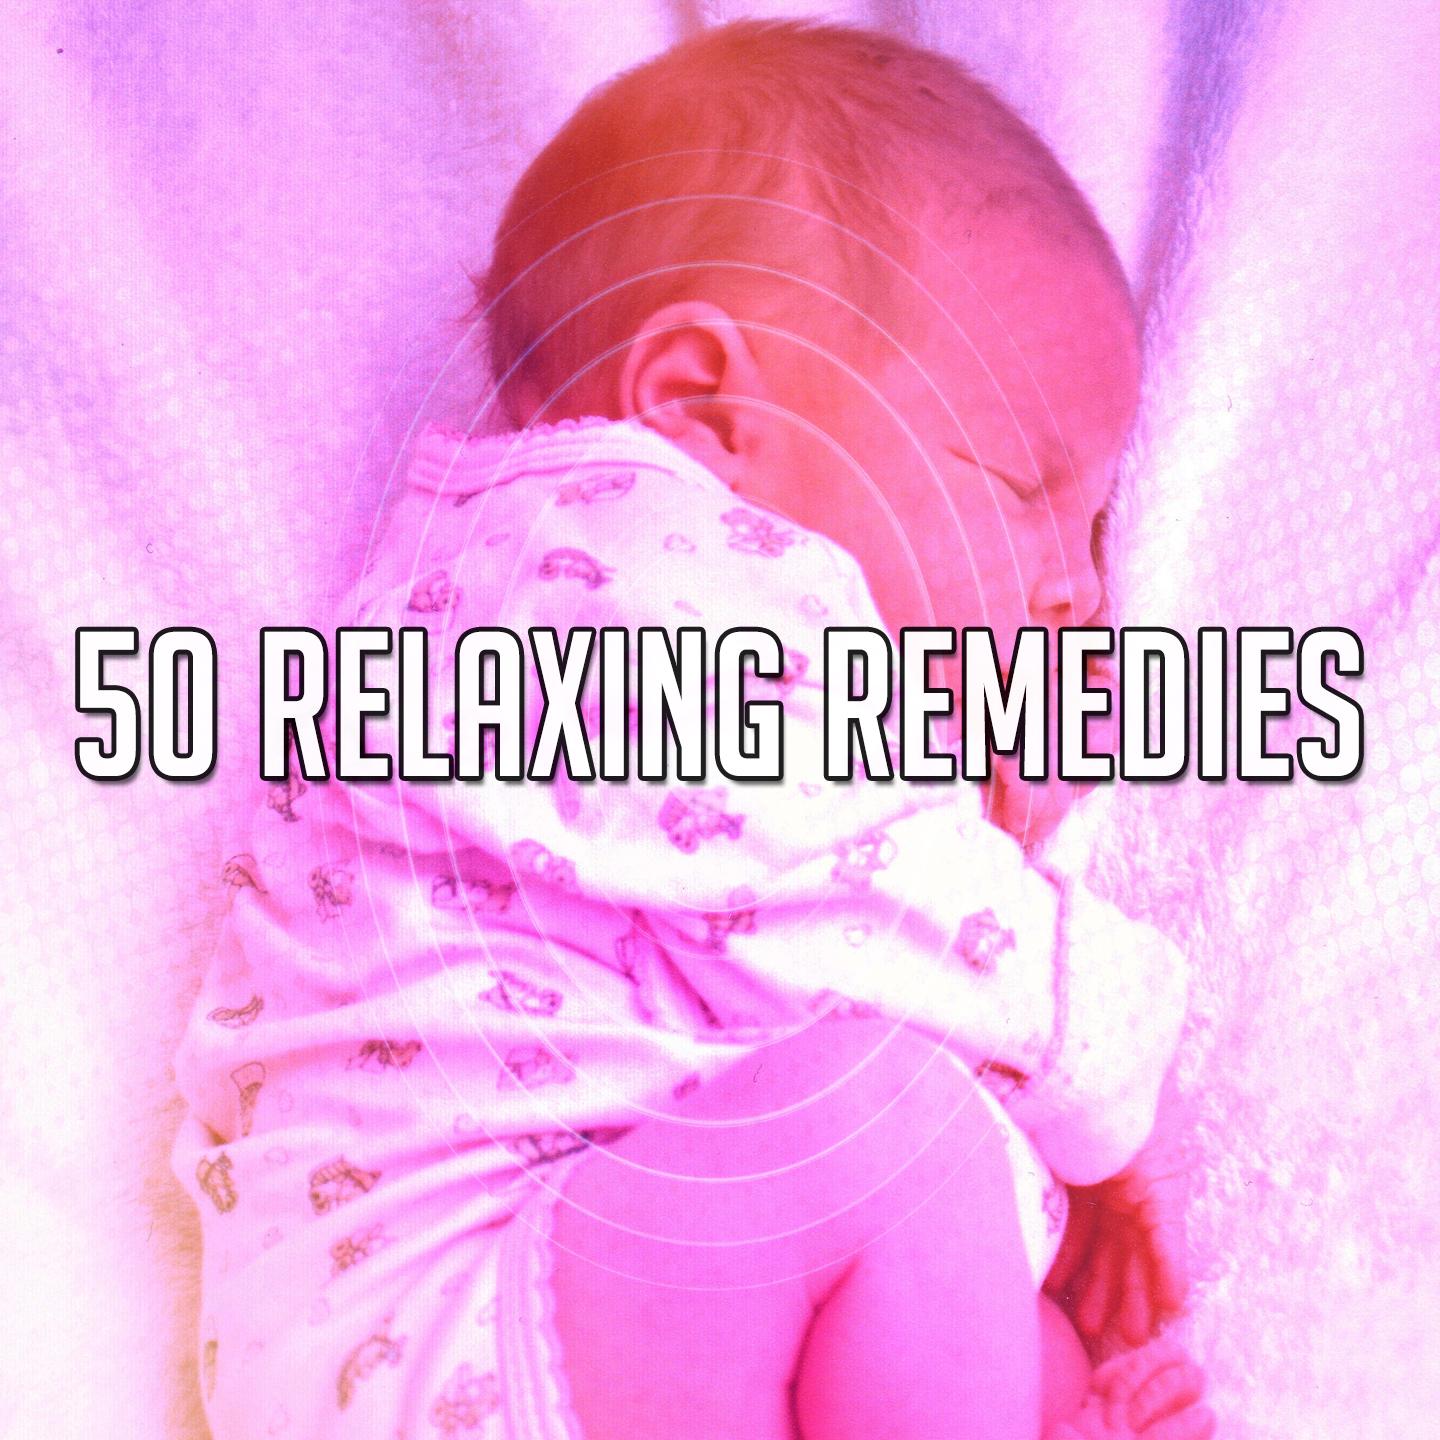 50 Relaxing Remedies